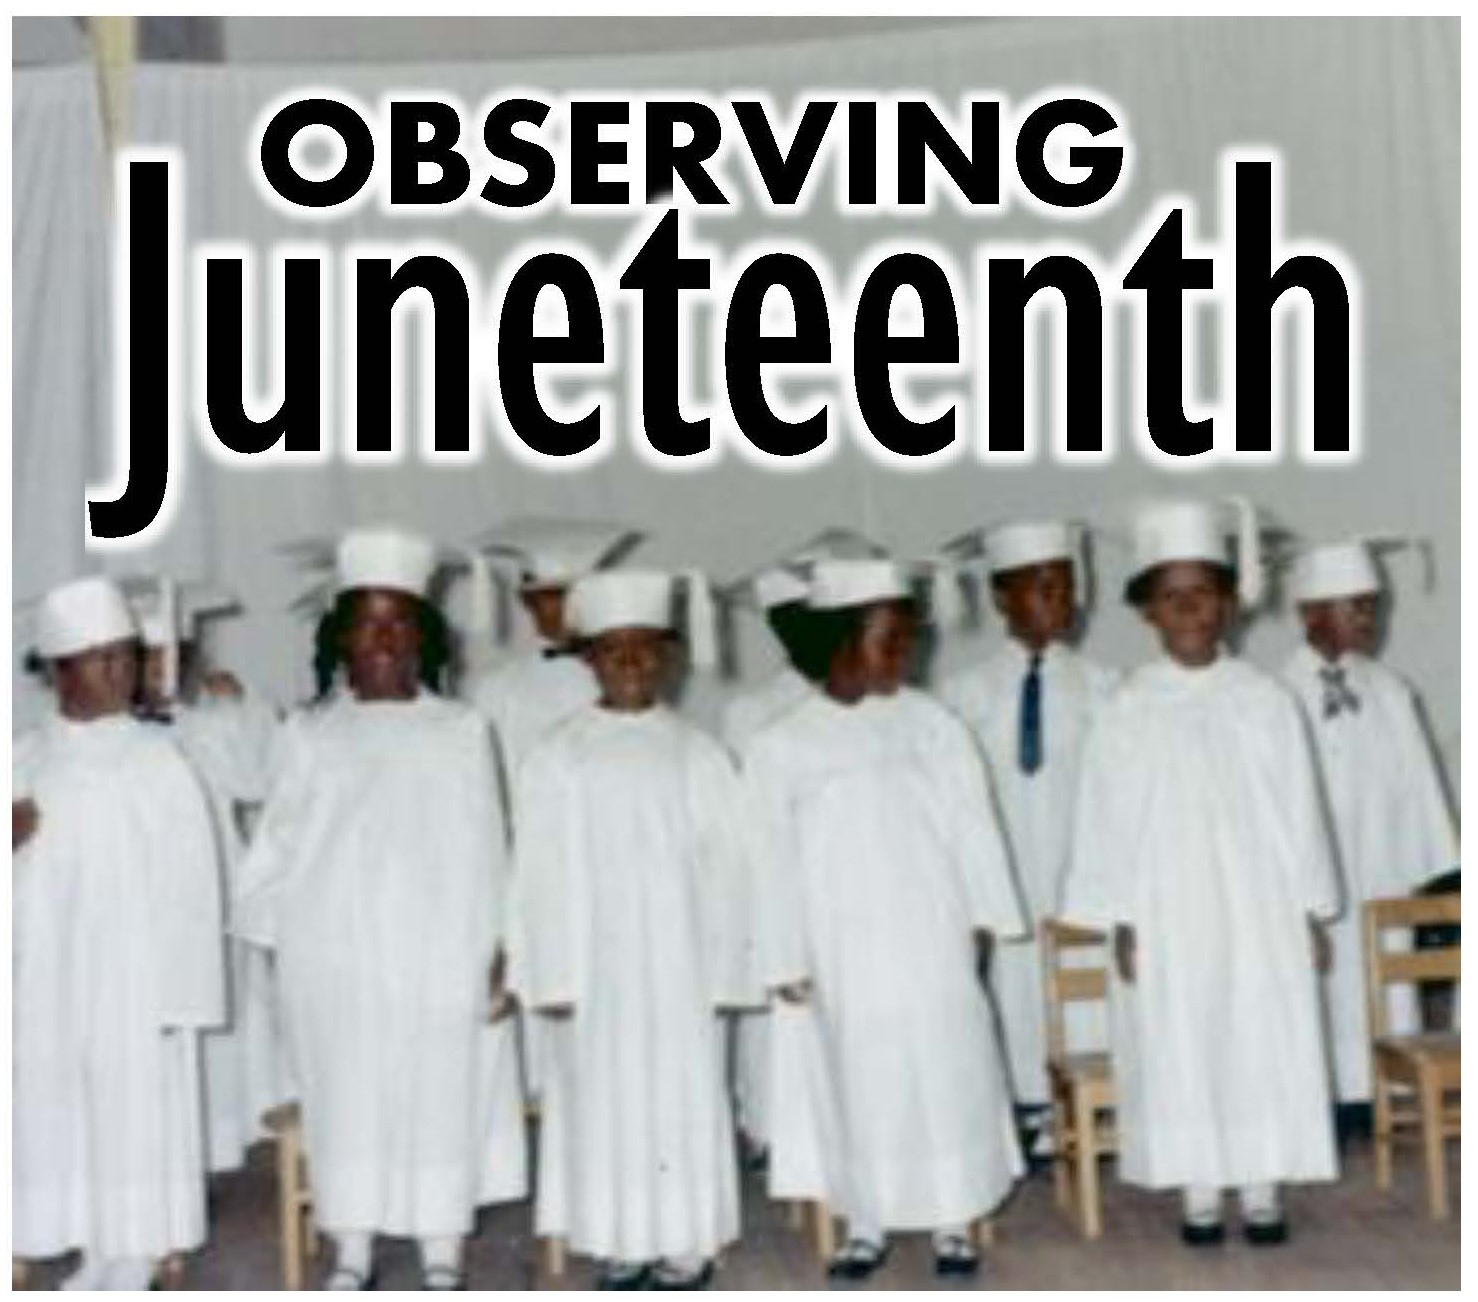 Several black children in white choir robes